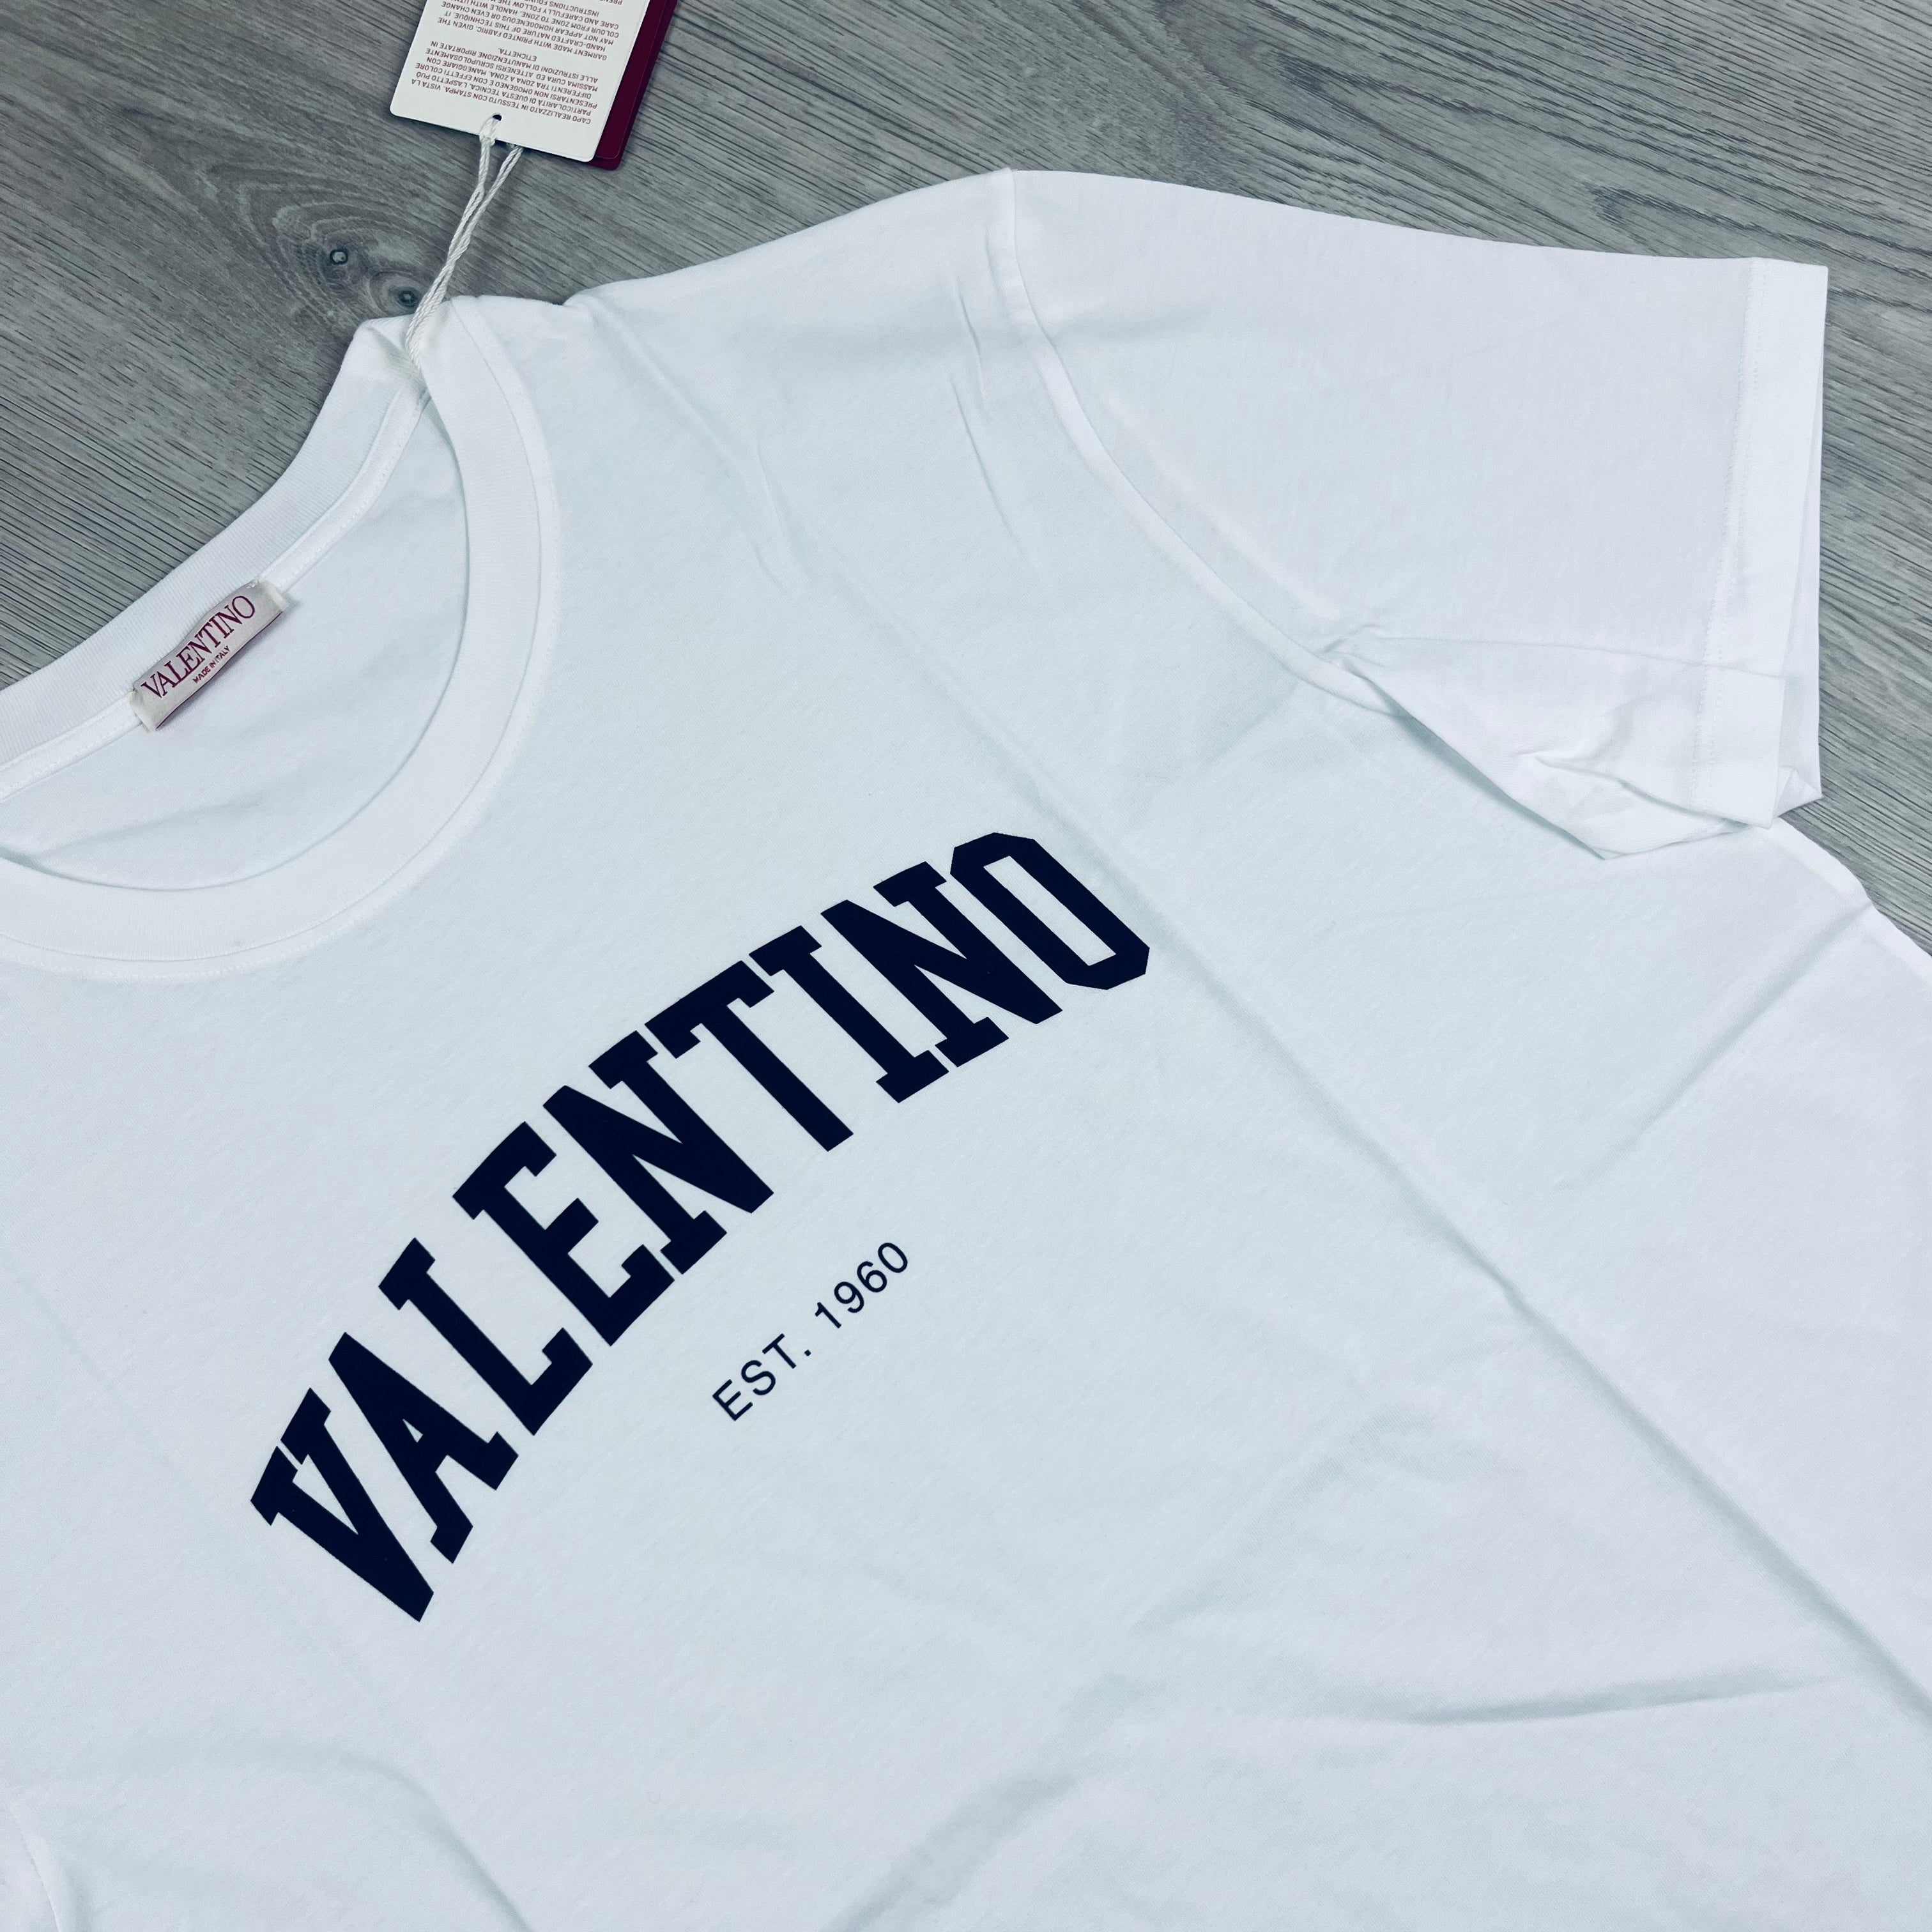 Valentino College T-Shirt